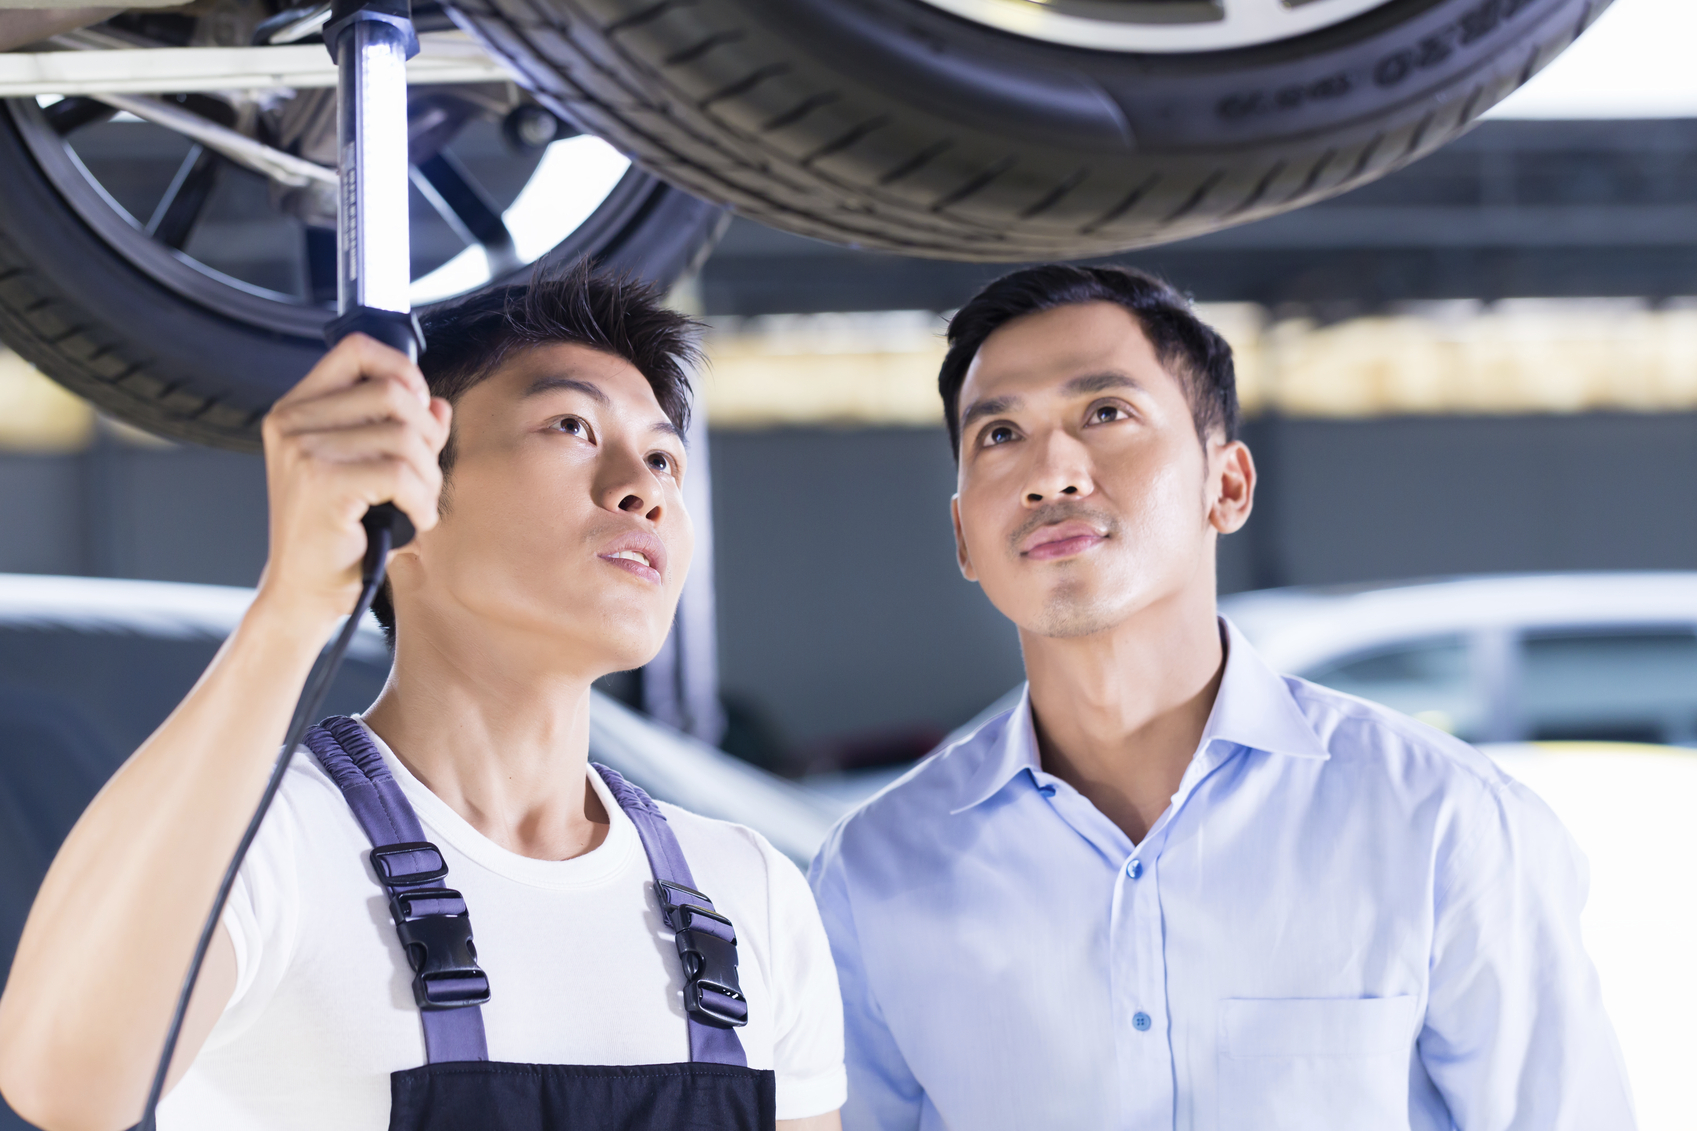 attract new auto repair customers